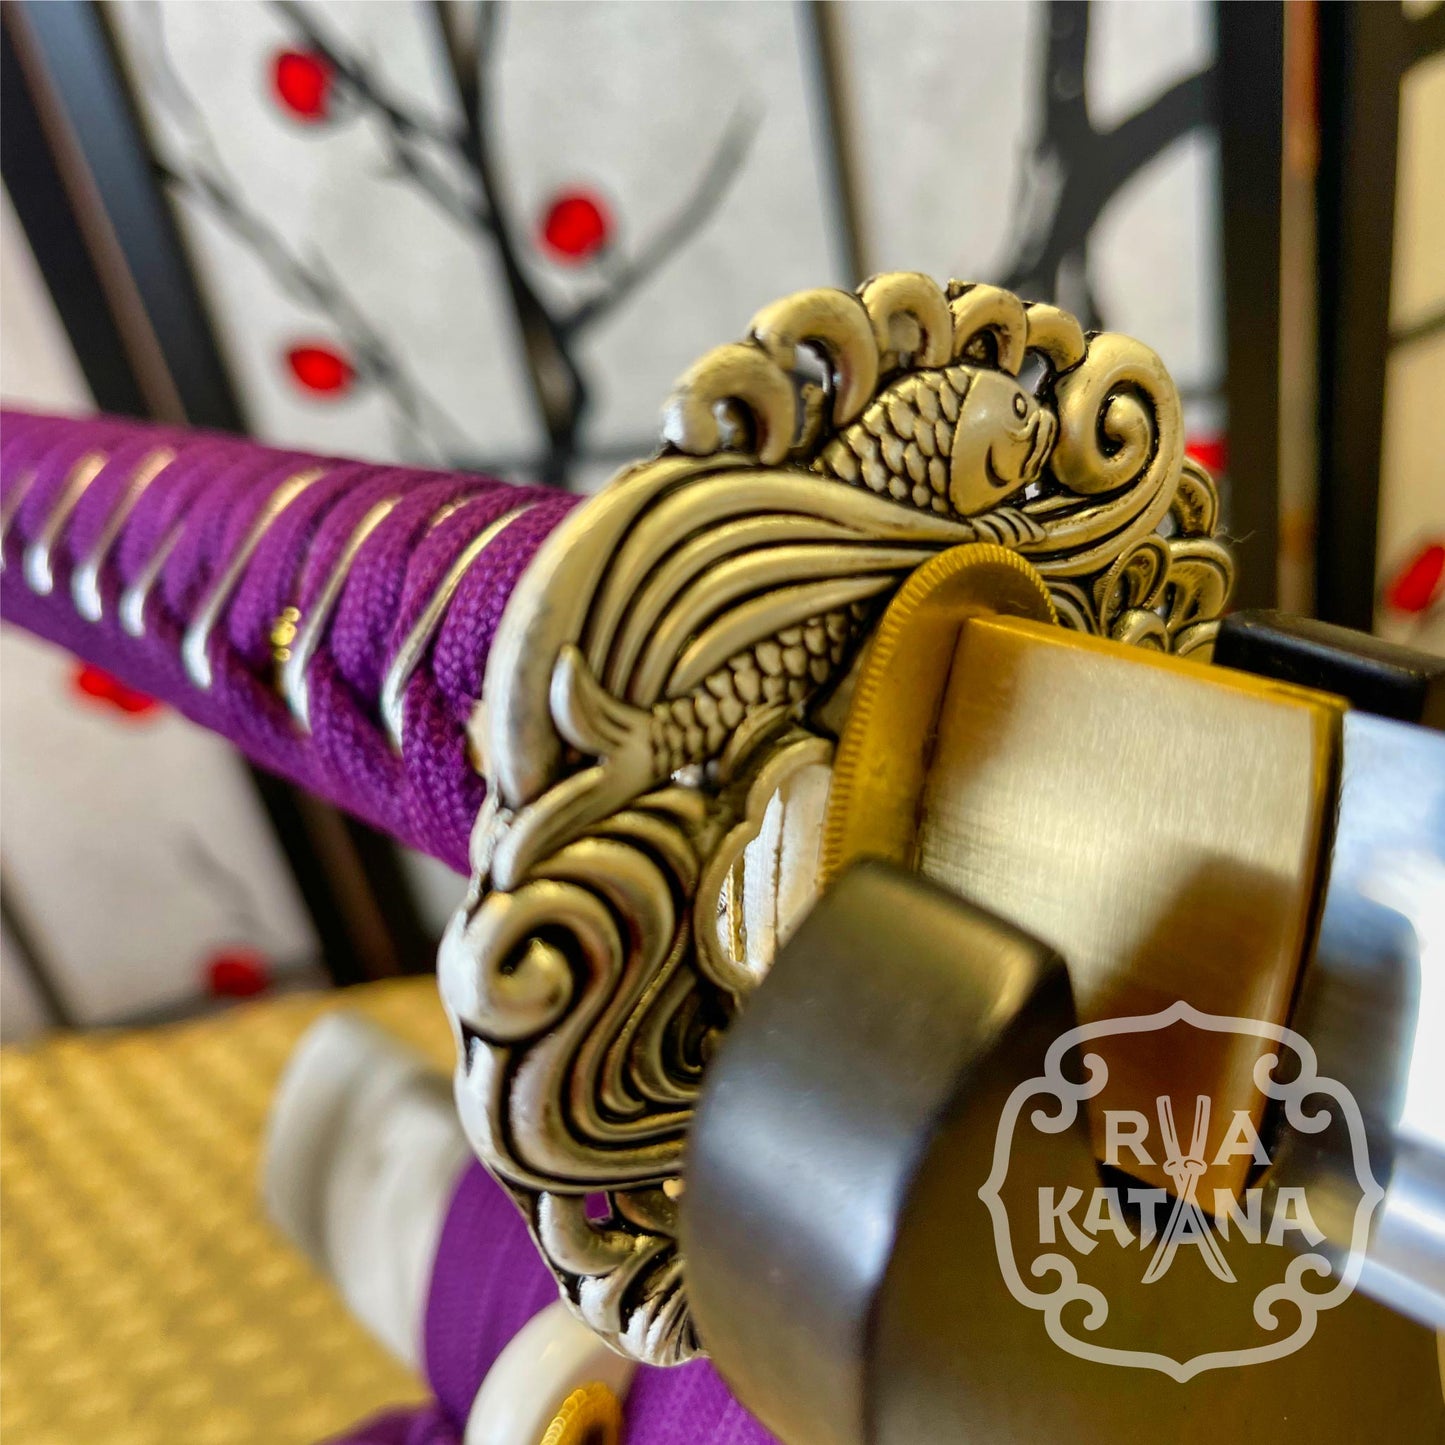 Dragonspring Forge Purple Carp Daisho 2 Sword Set T10